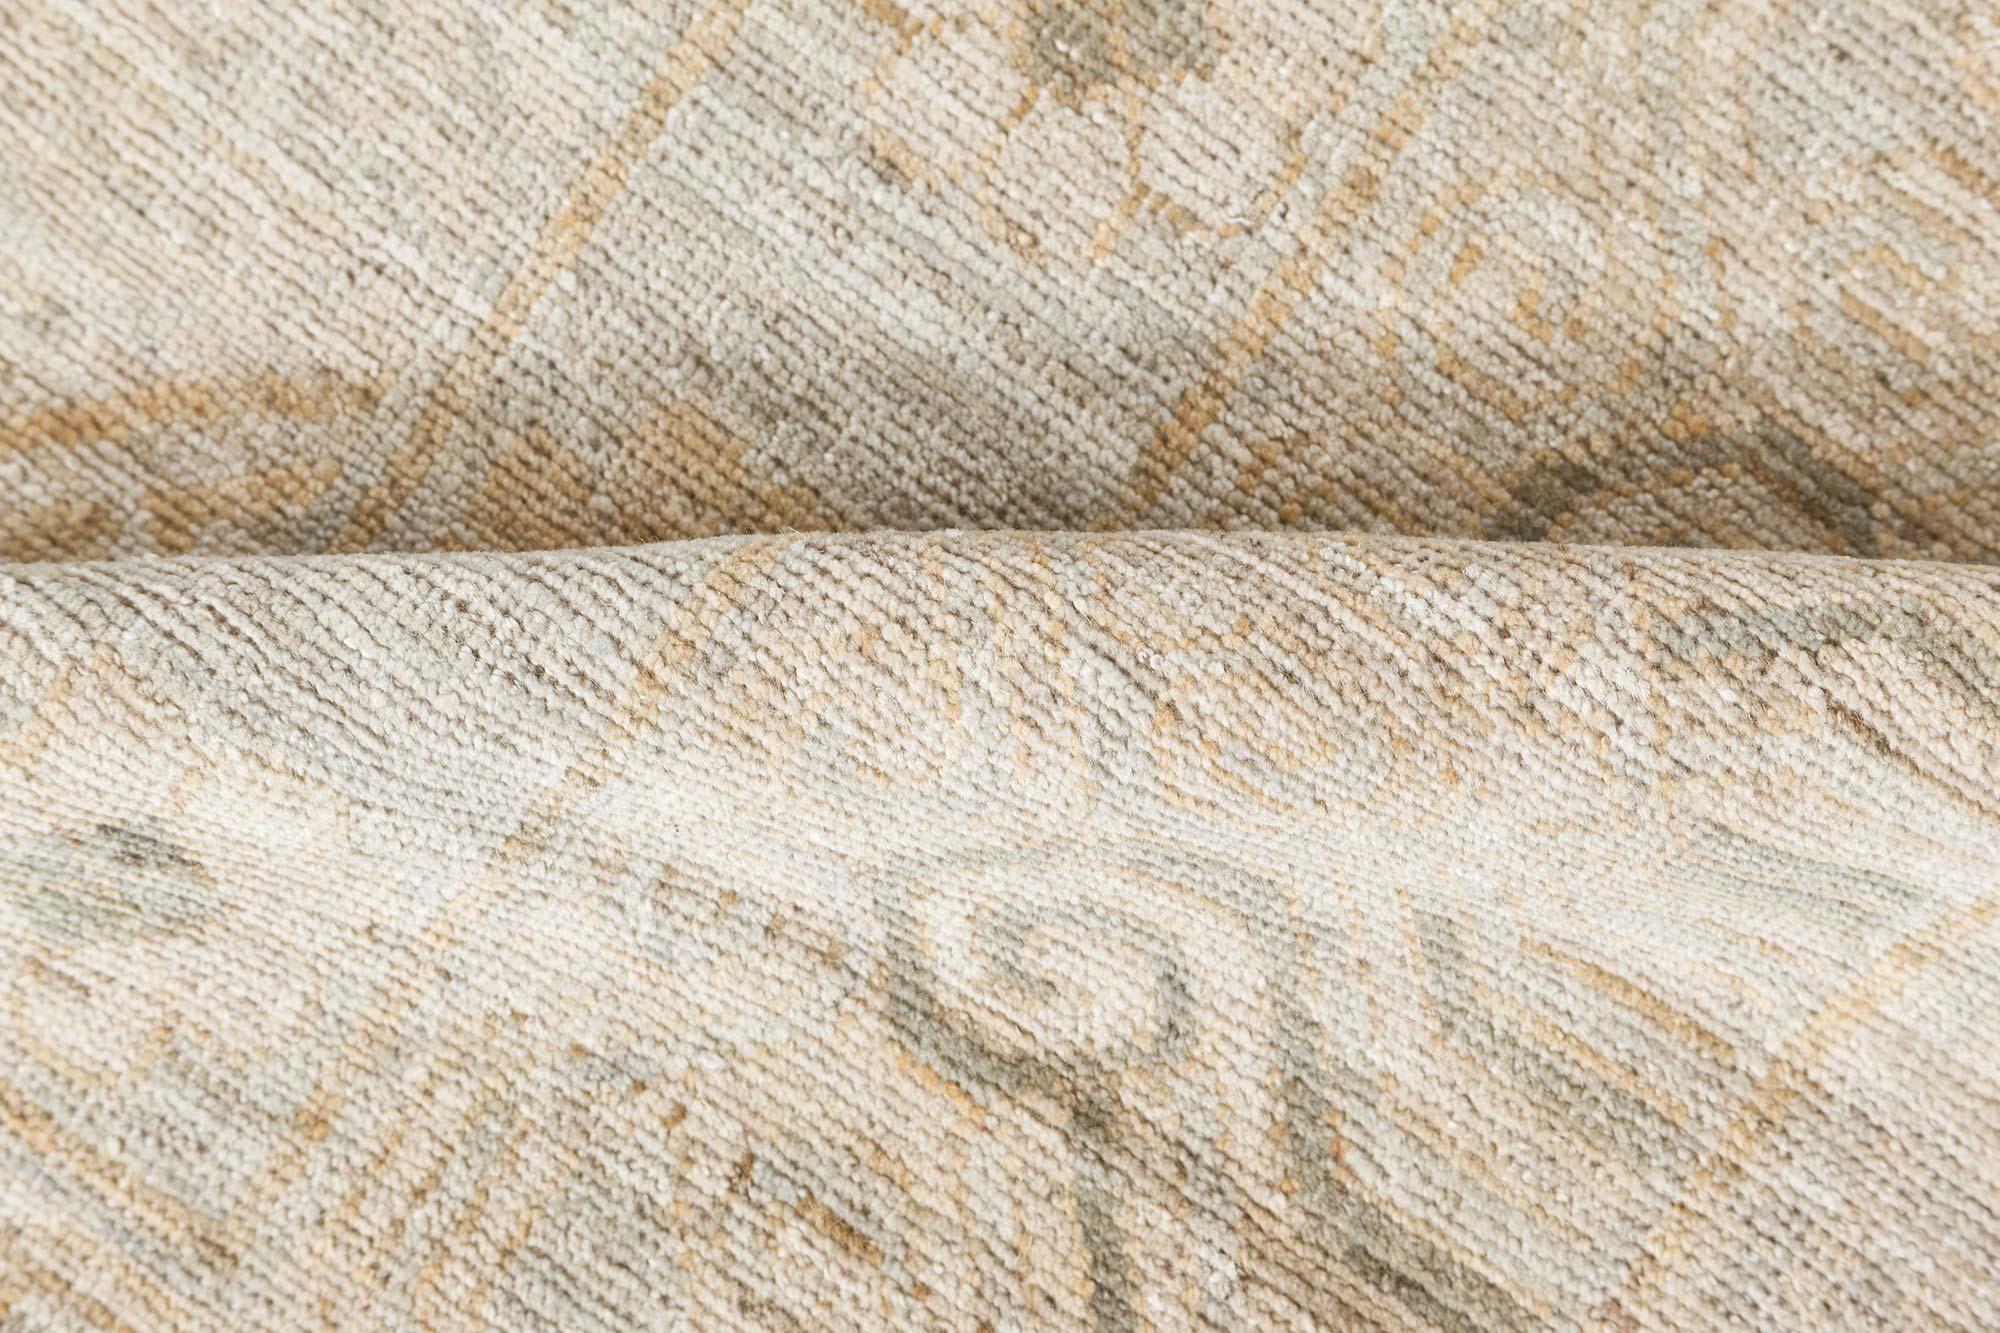 Contemporary square Samarkand Botanic handmade wool rug by Doris Leslie Blau
Size: 13'7